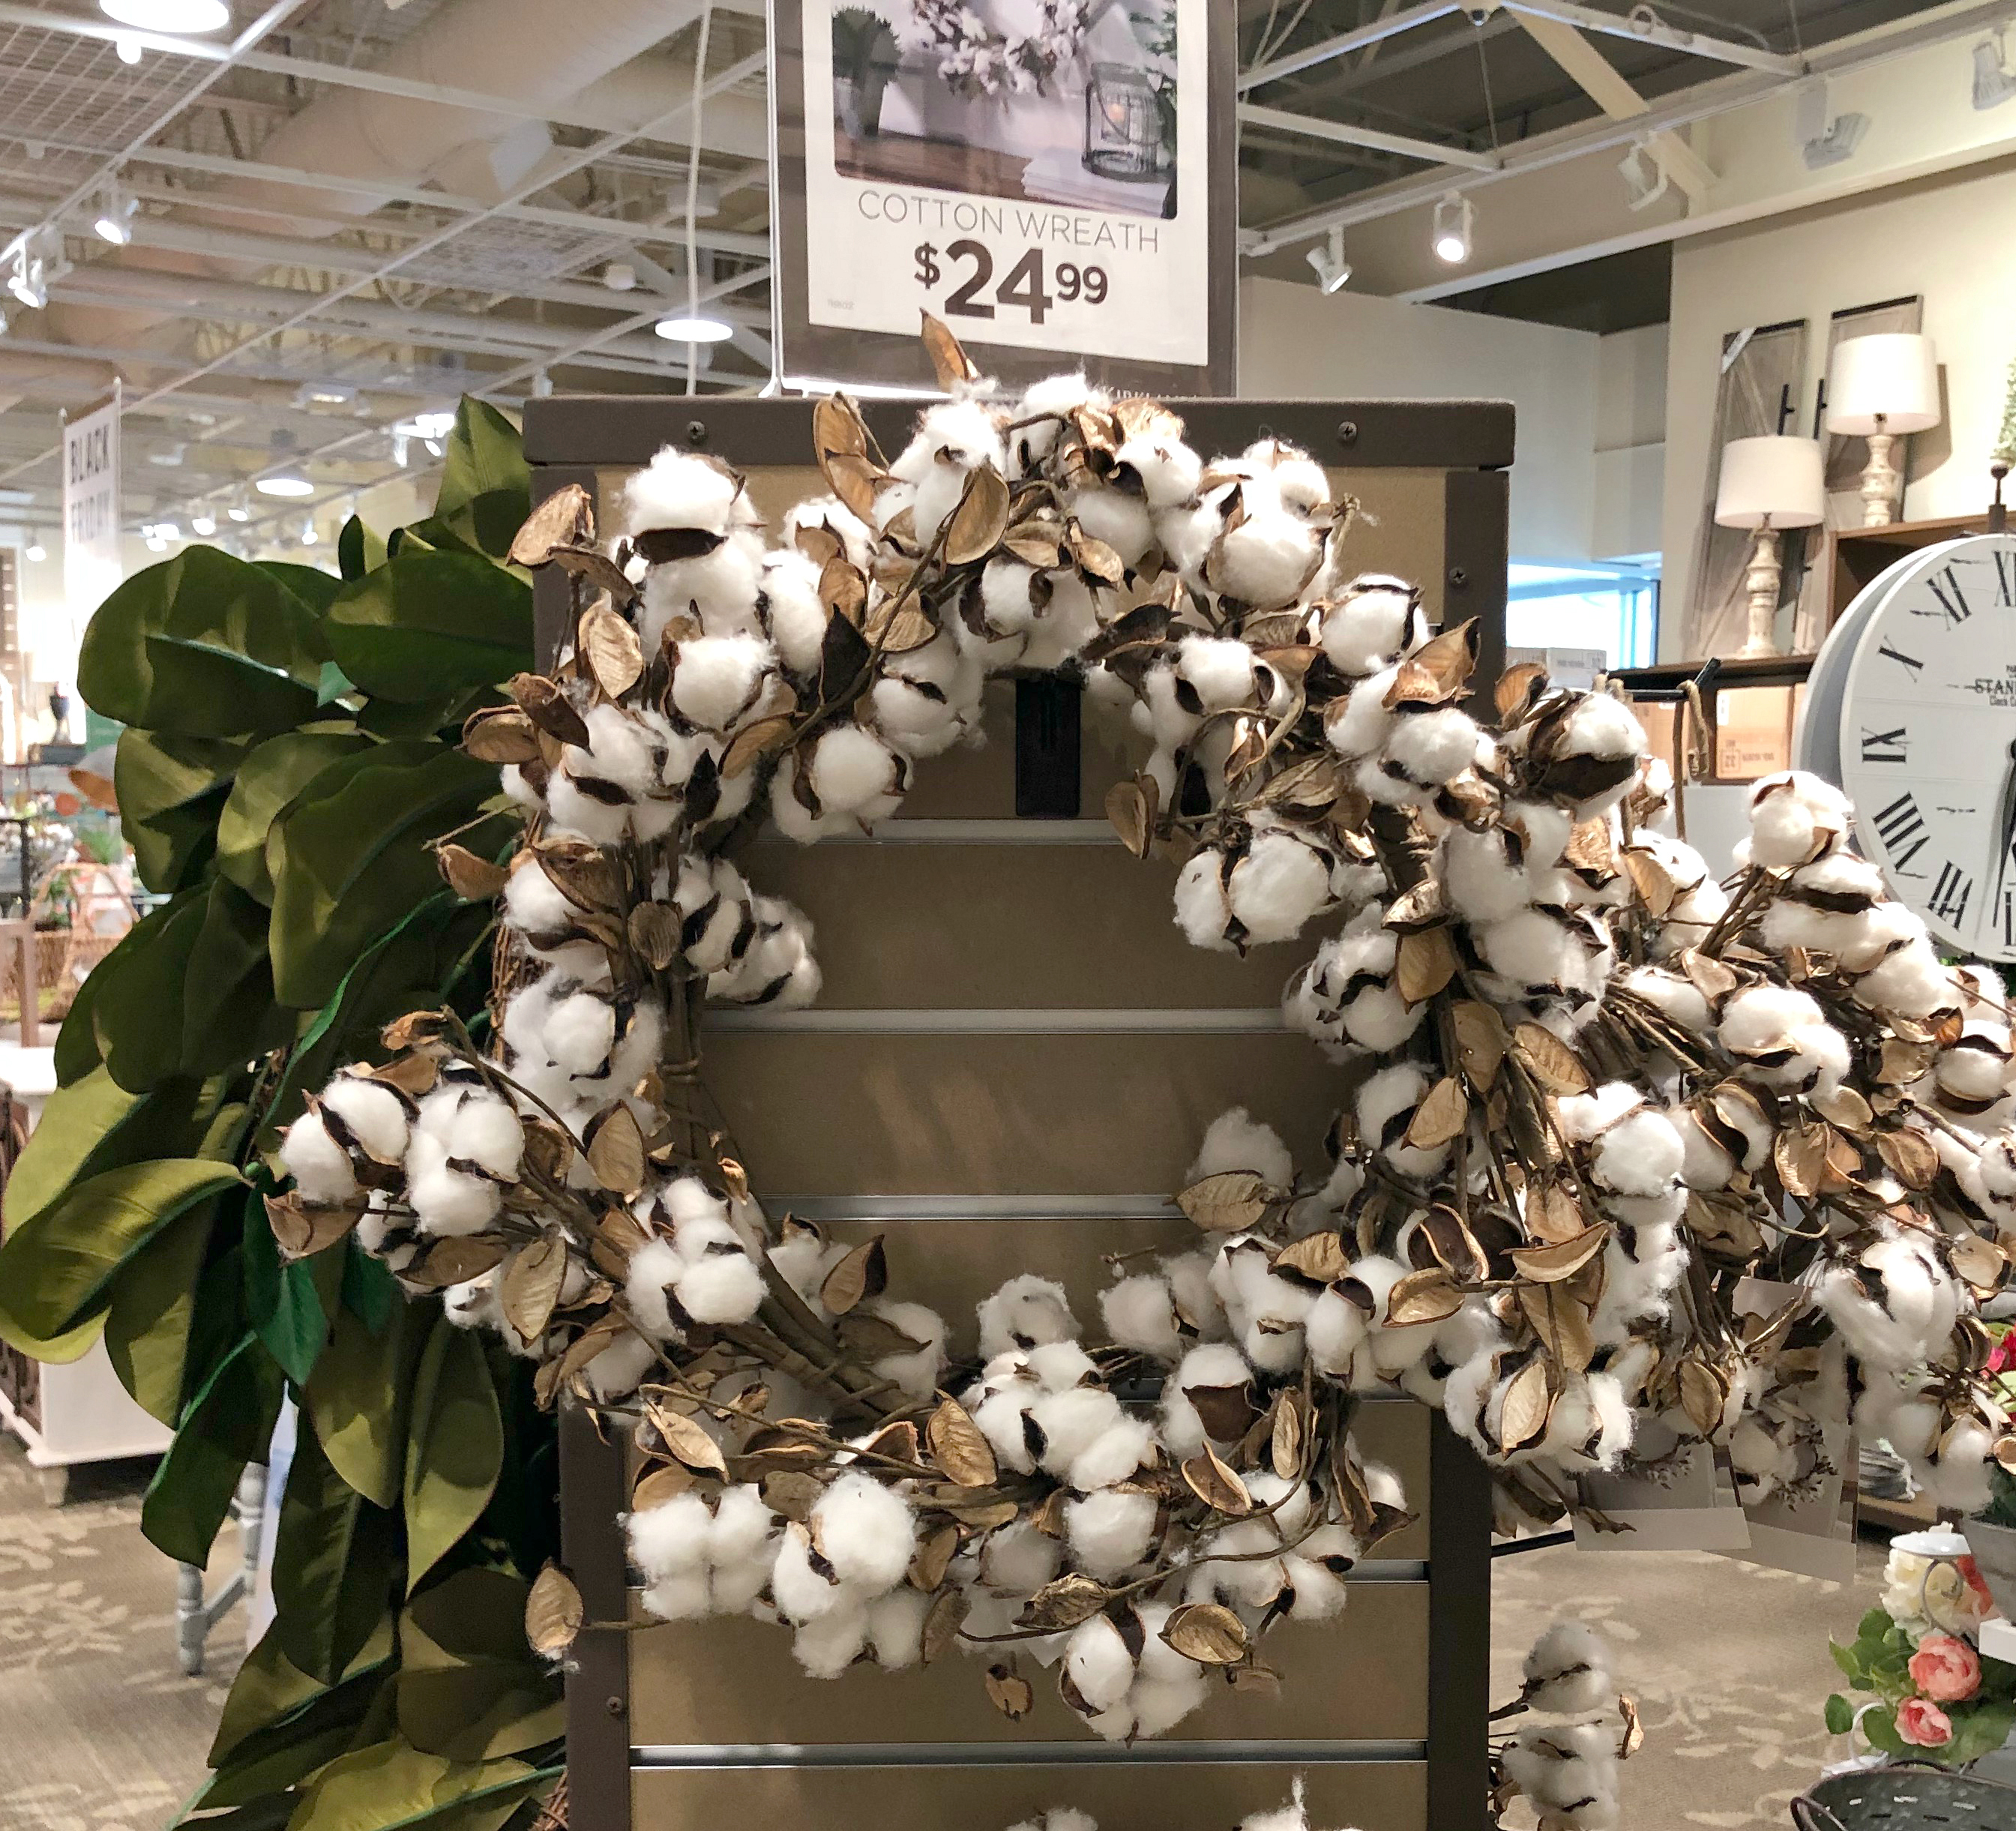 This Kirkland's Cotton Wreaths look just Magnolia Market's wreaths.